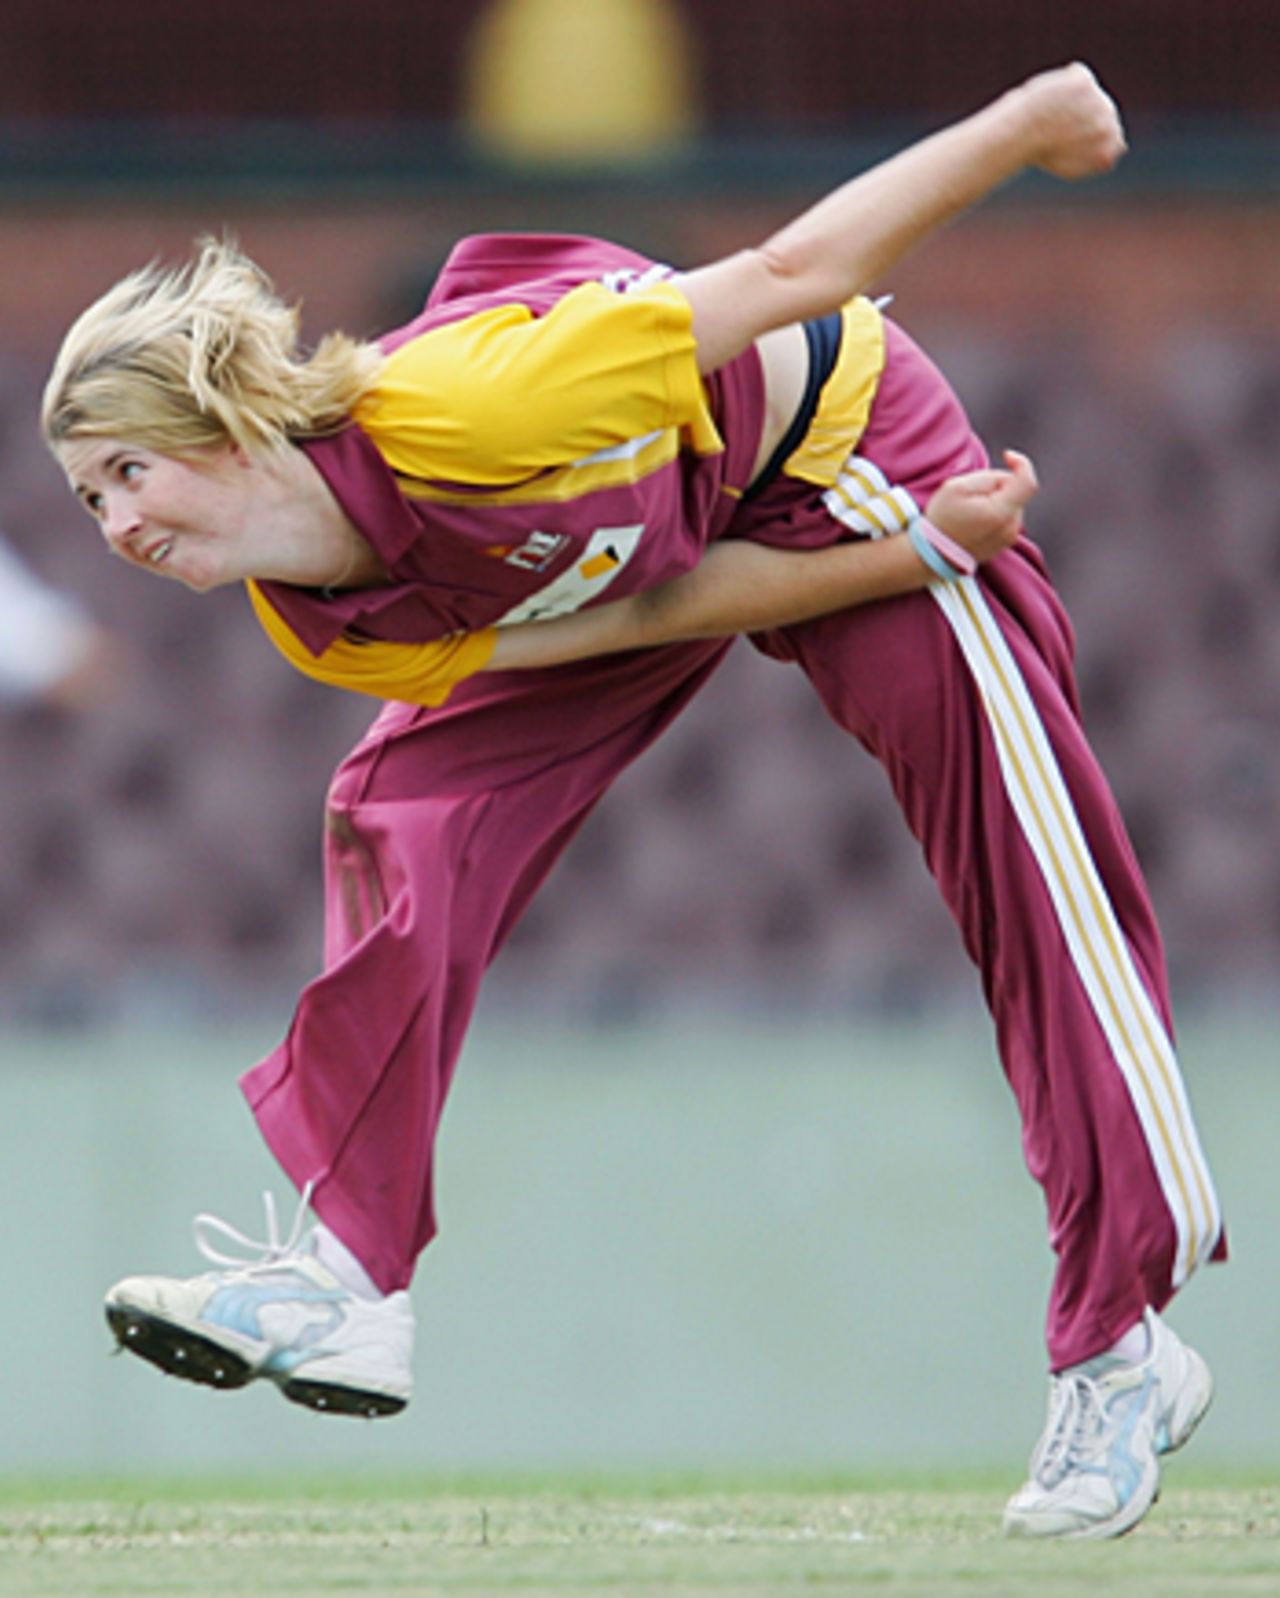 Rikki-Lee Rimington in action, NSW v Queensland, Sydney Cricket Ground, December 3, 2005